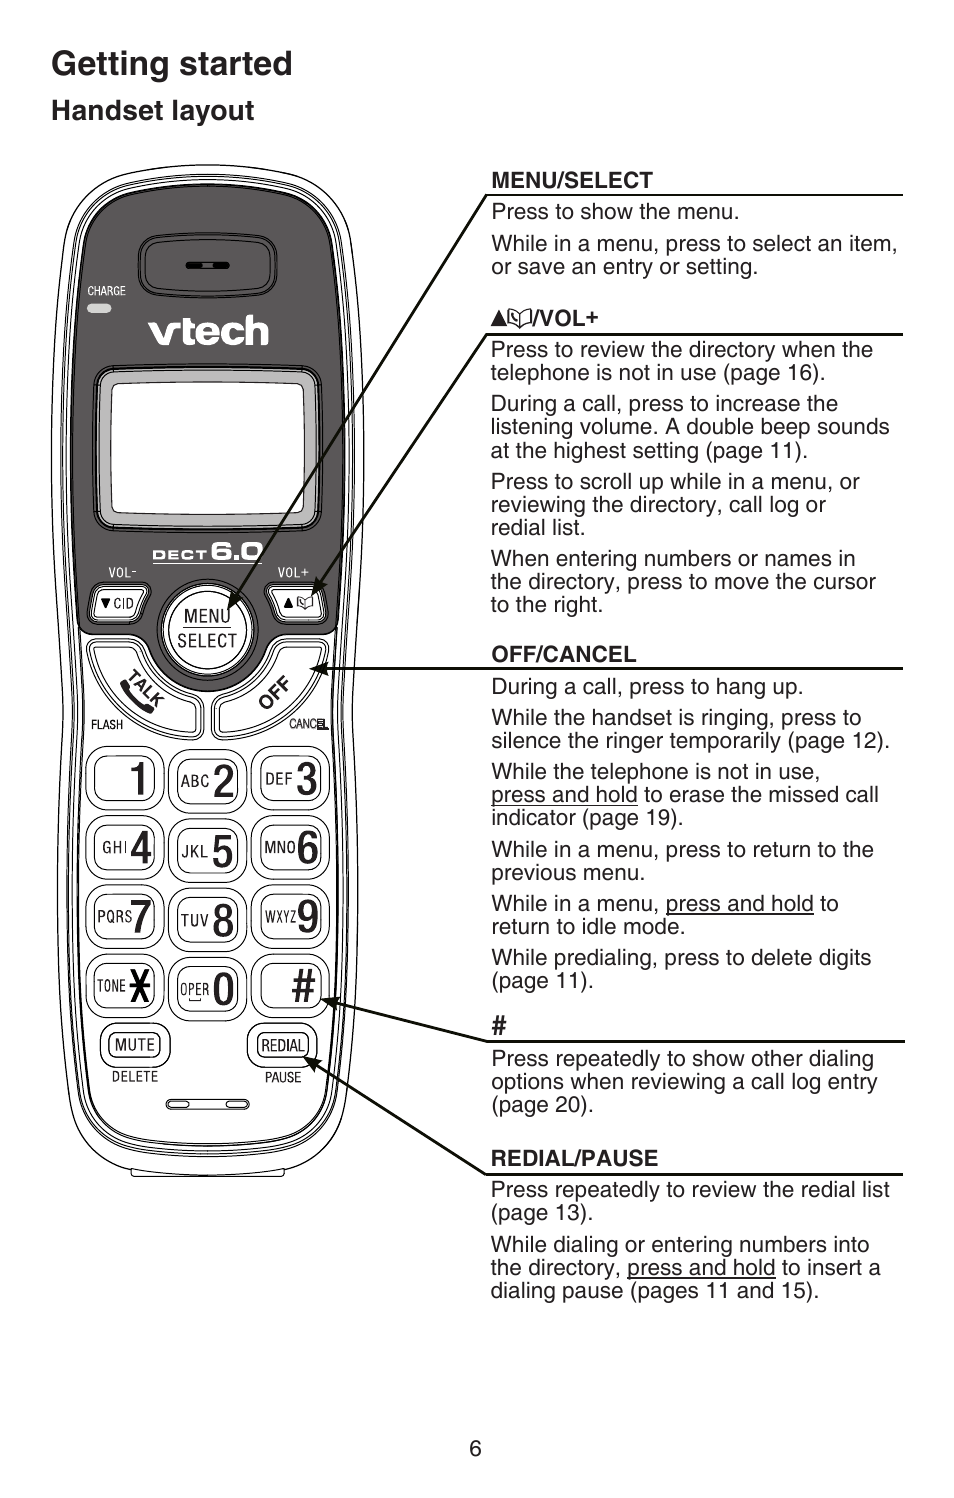 Getting started, Handset layout VTech DECT 6.0 CS6114 User Manual